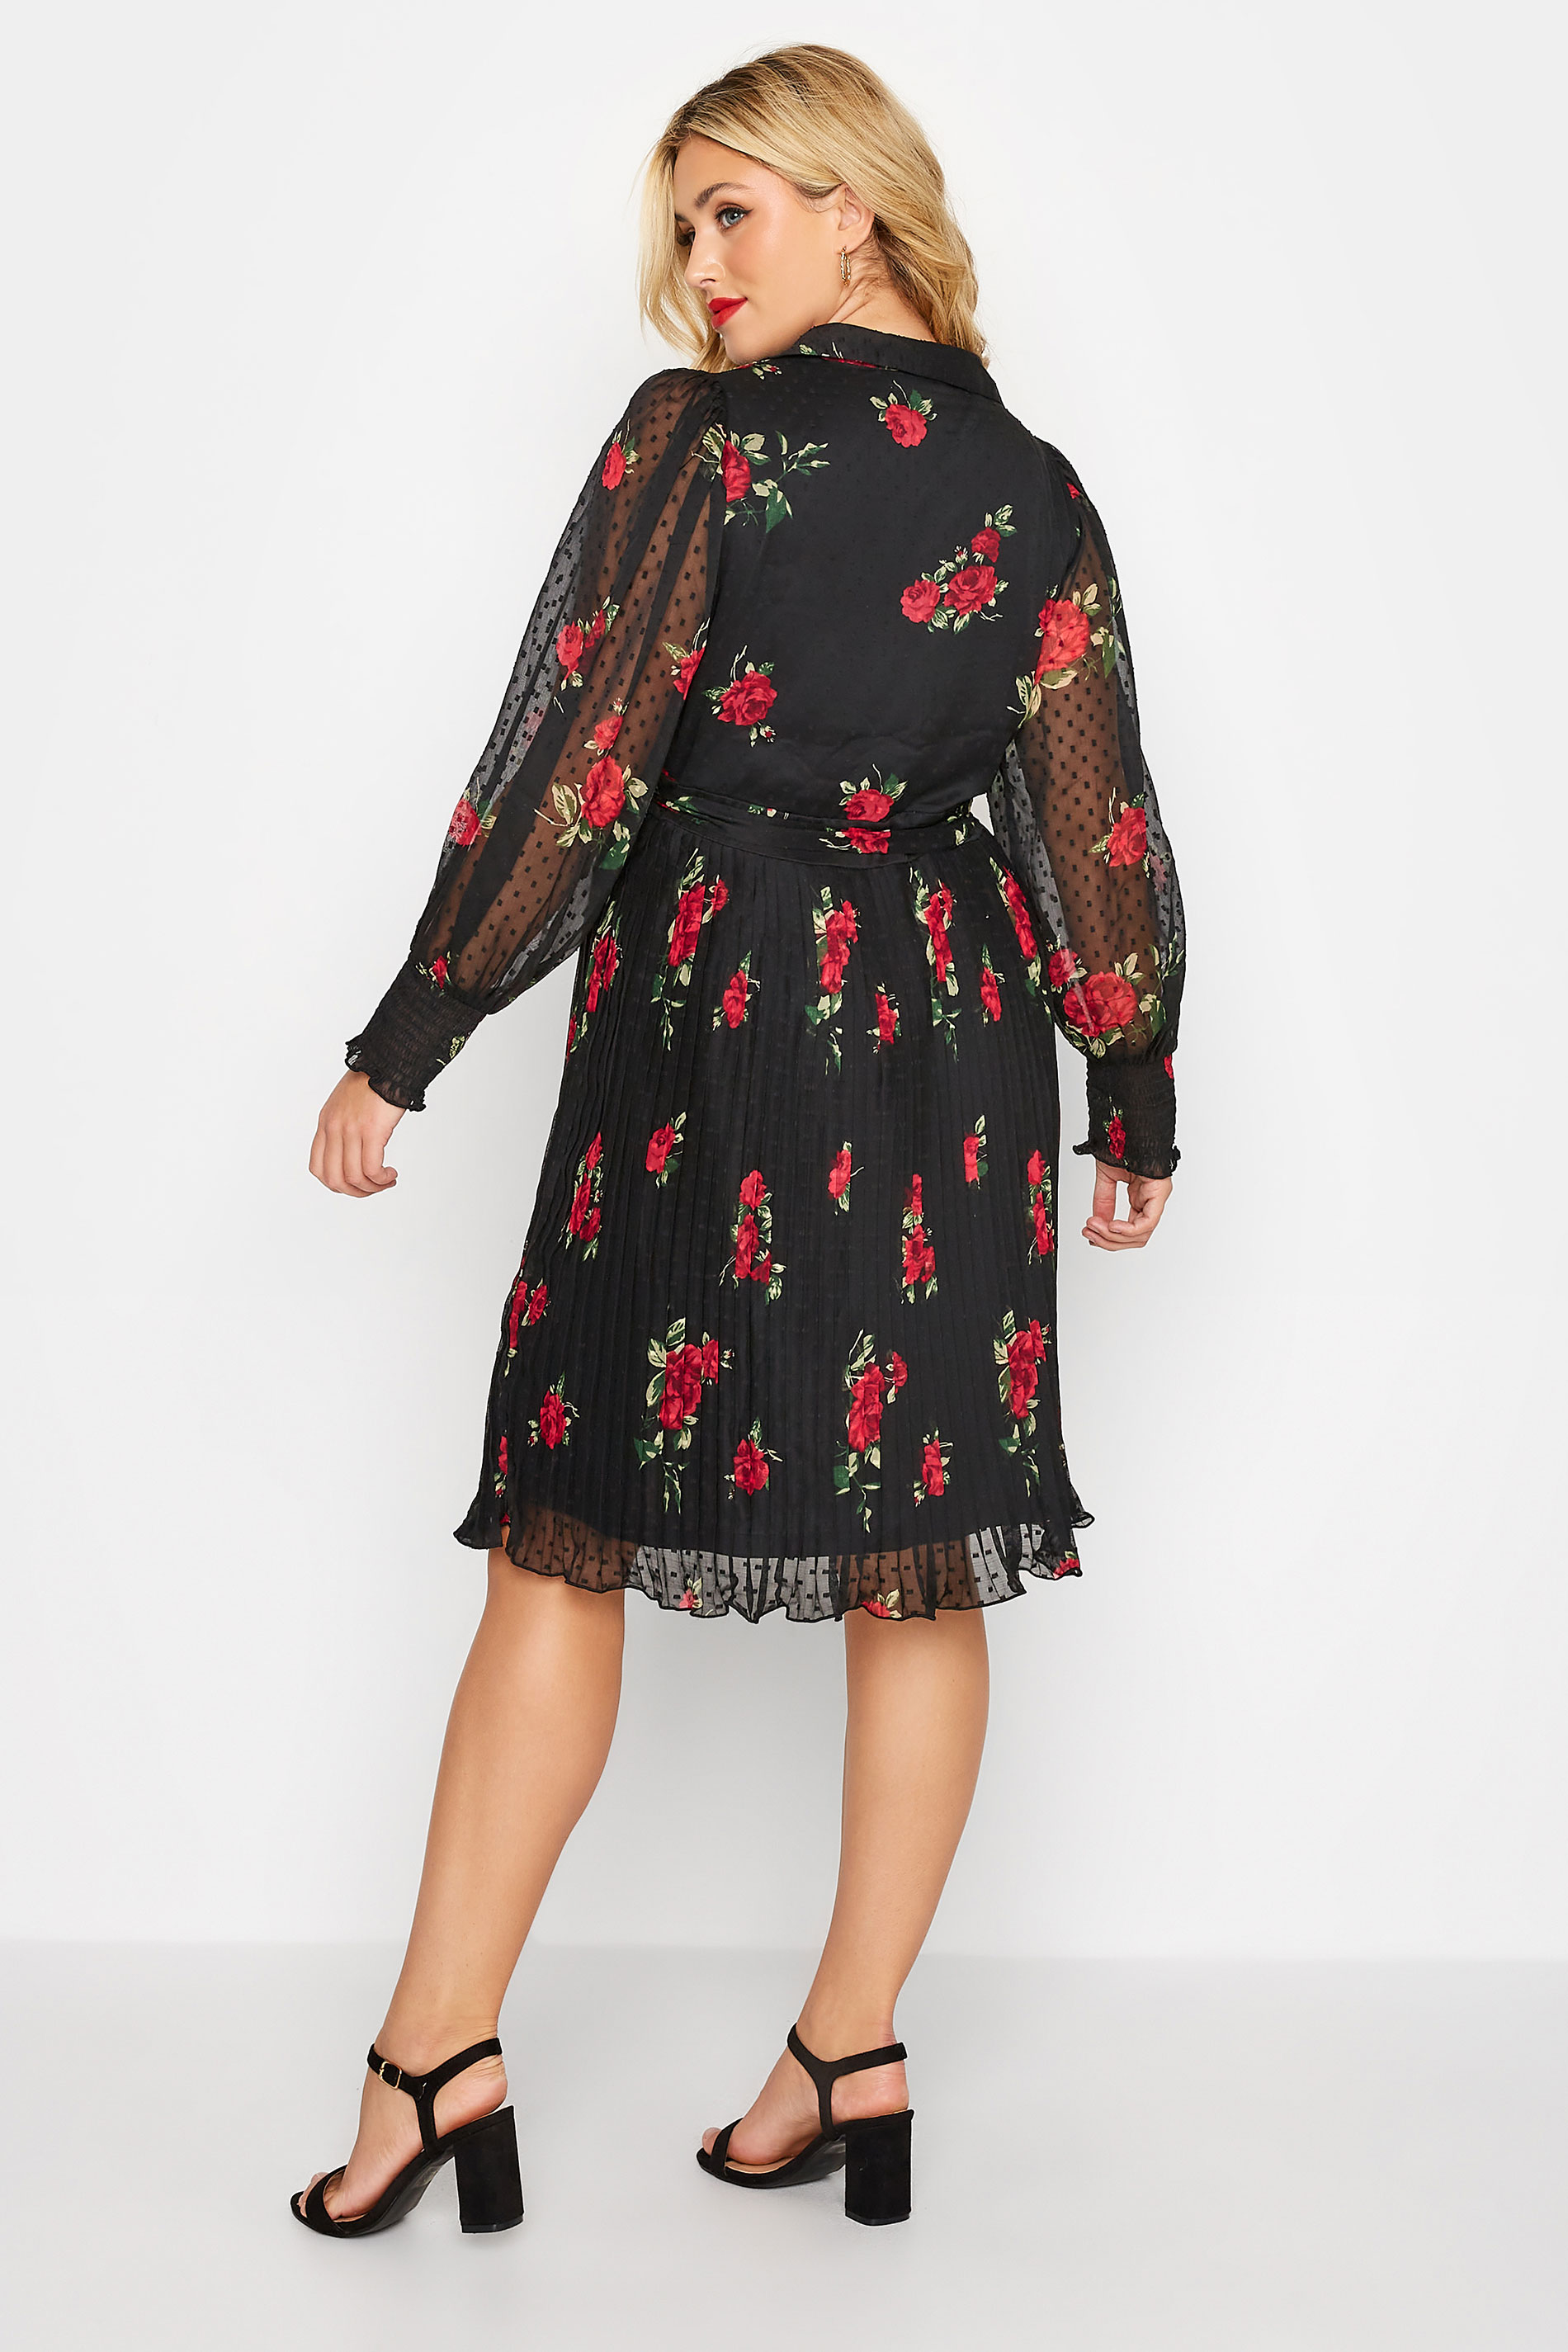 YOURS LONDON Plus Size Black Rose Print Dobby Shirt Dress | Yours Clothing 3